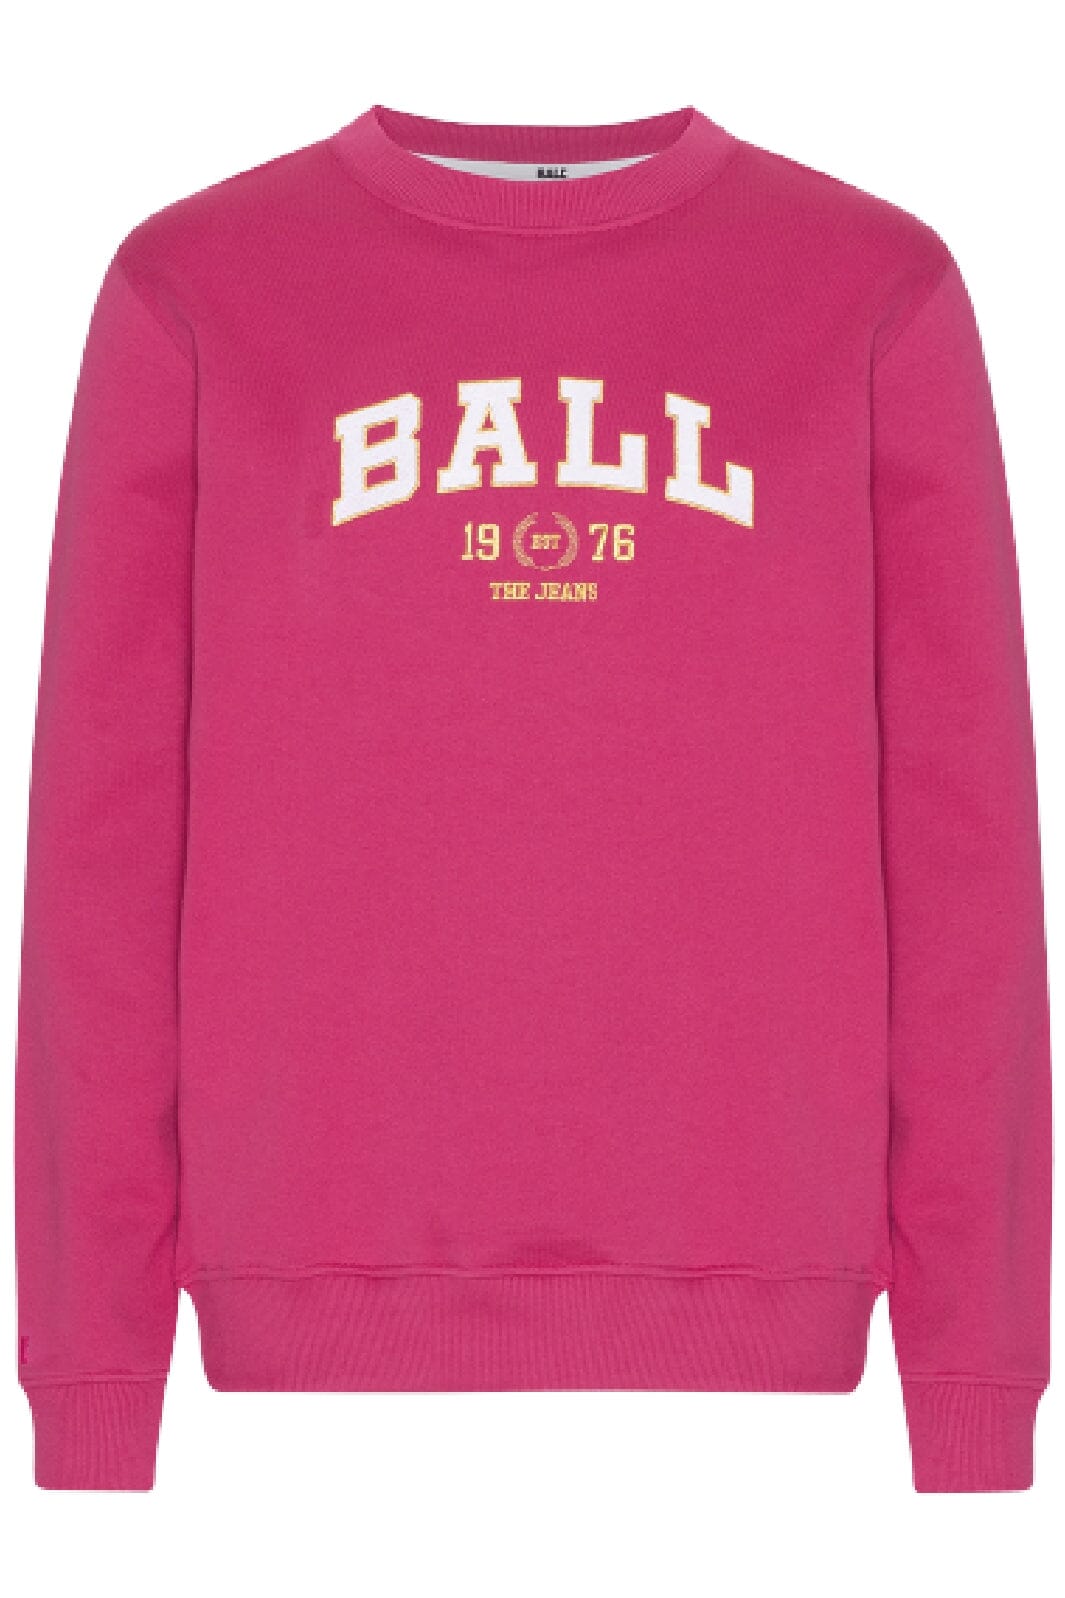 Ball - L. Taylor - Deep Pink Sweatshirts 